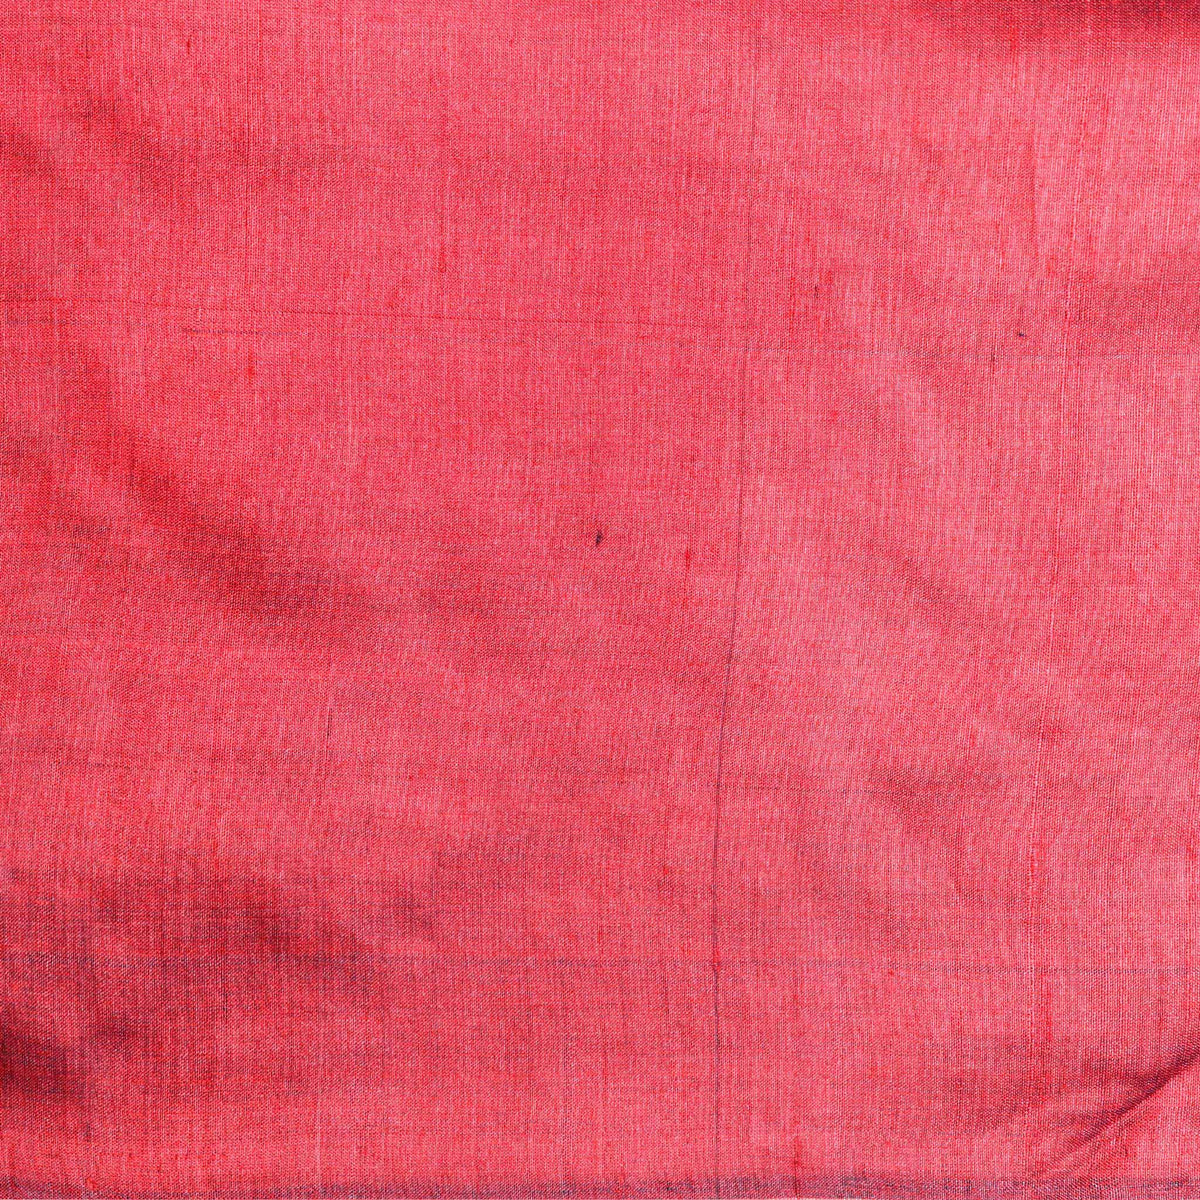 THIKRI Ikat Tussar Handwoven Silk Sari - Black and Red